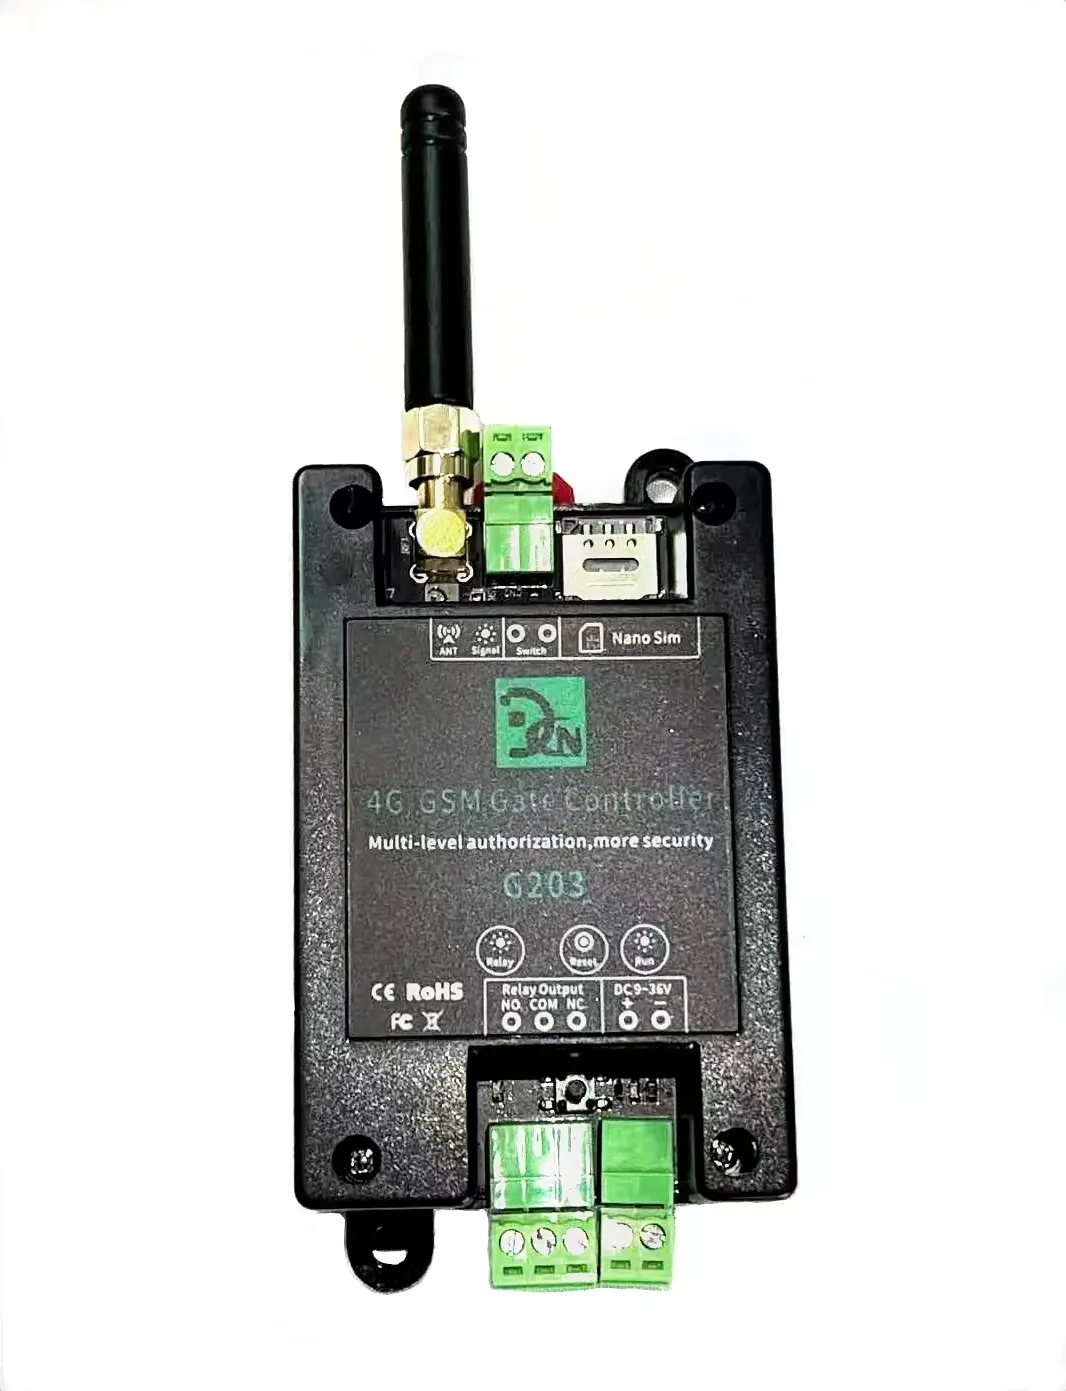 Chisung Unterstützung 999 Nutzer neues Modell G203 4G GSM Relais SIM-Karte GSM Relais-Schalter kostenlose Anruf-Anwendung Kontrole